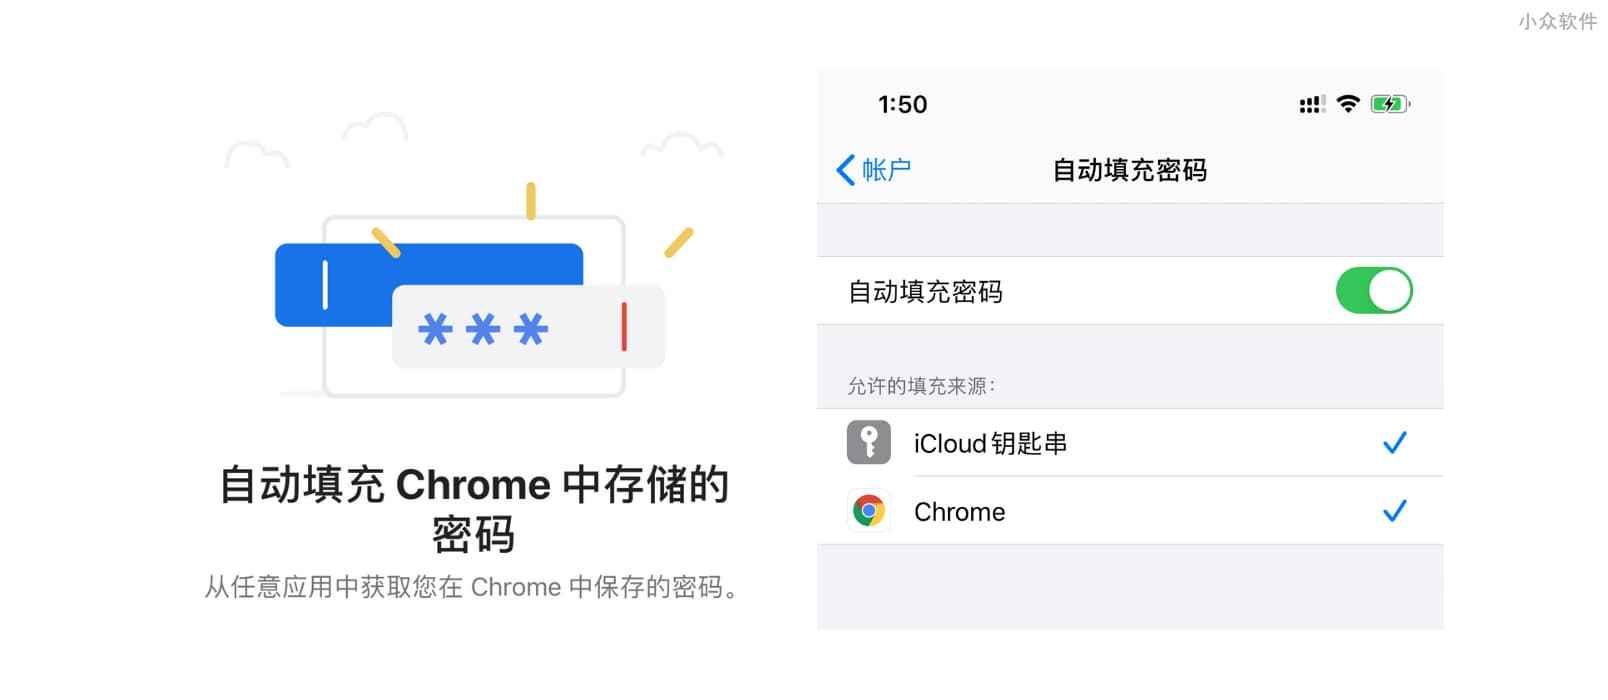 Chrome 已支持在 iOS 同步密码，并在浏览器及第三方应用自动填充密码